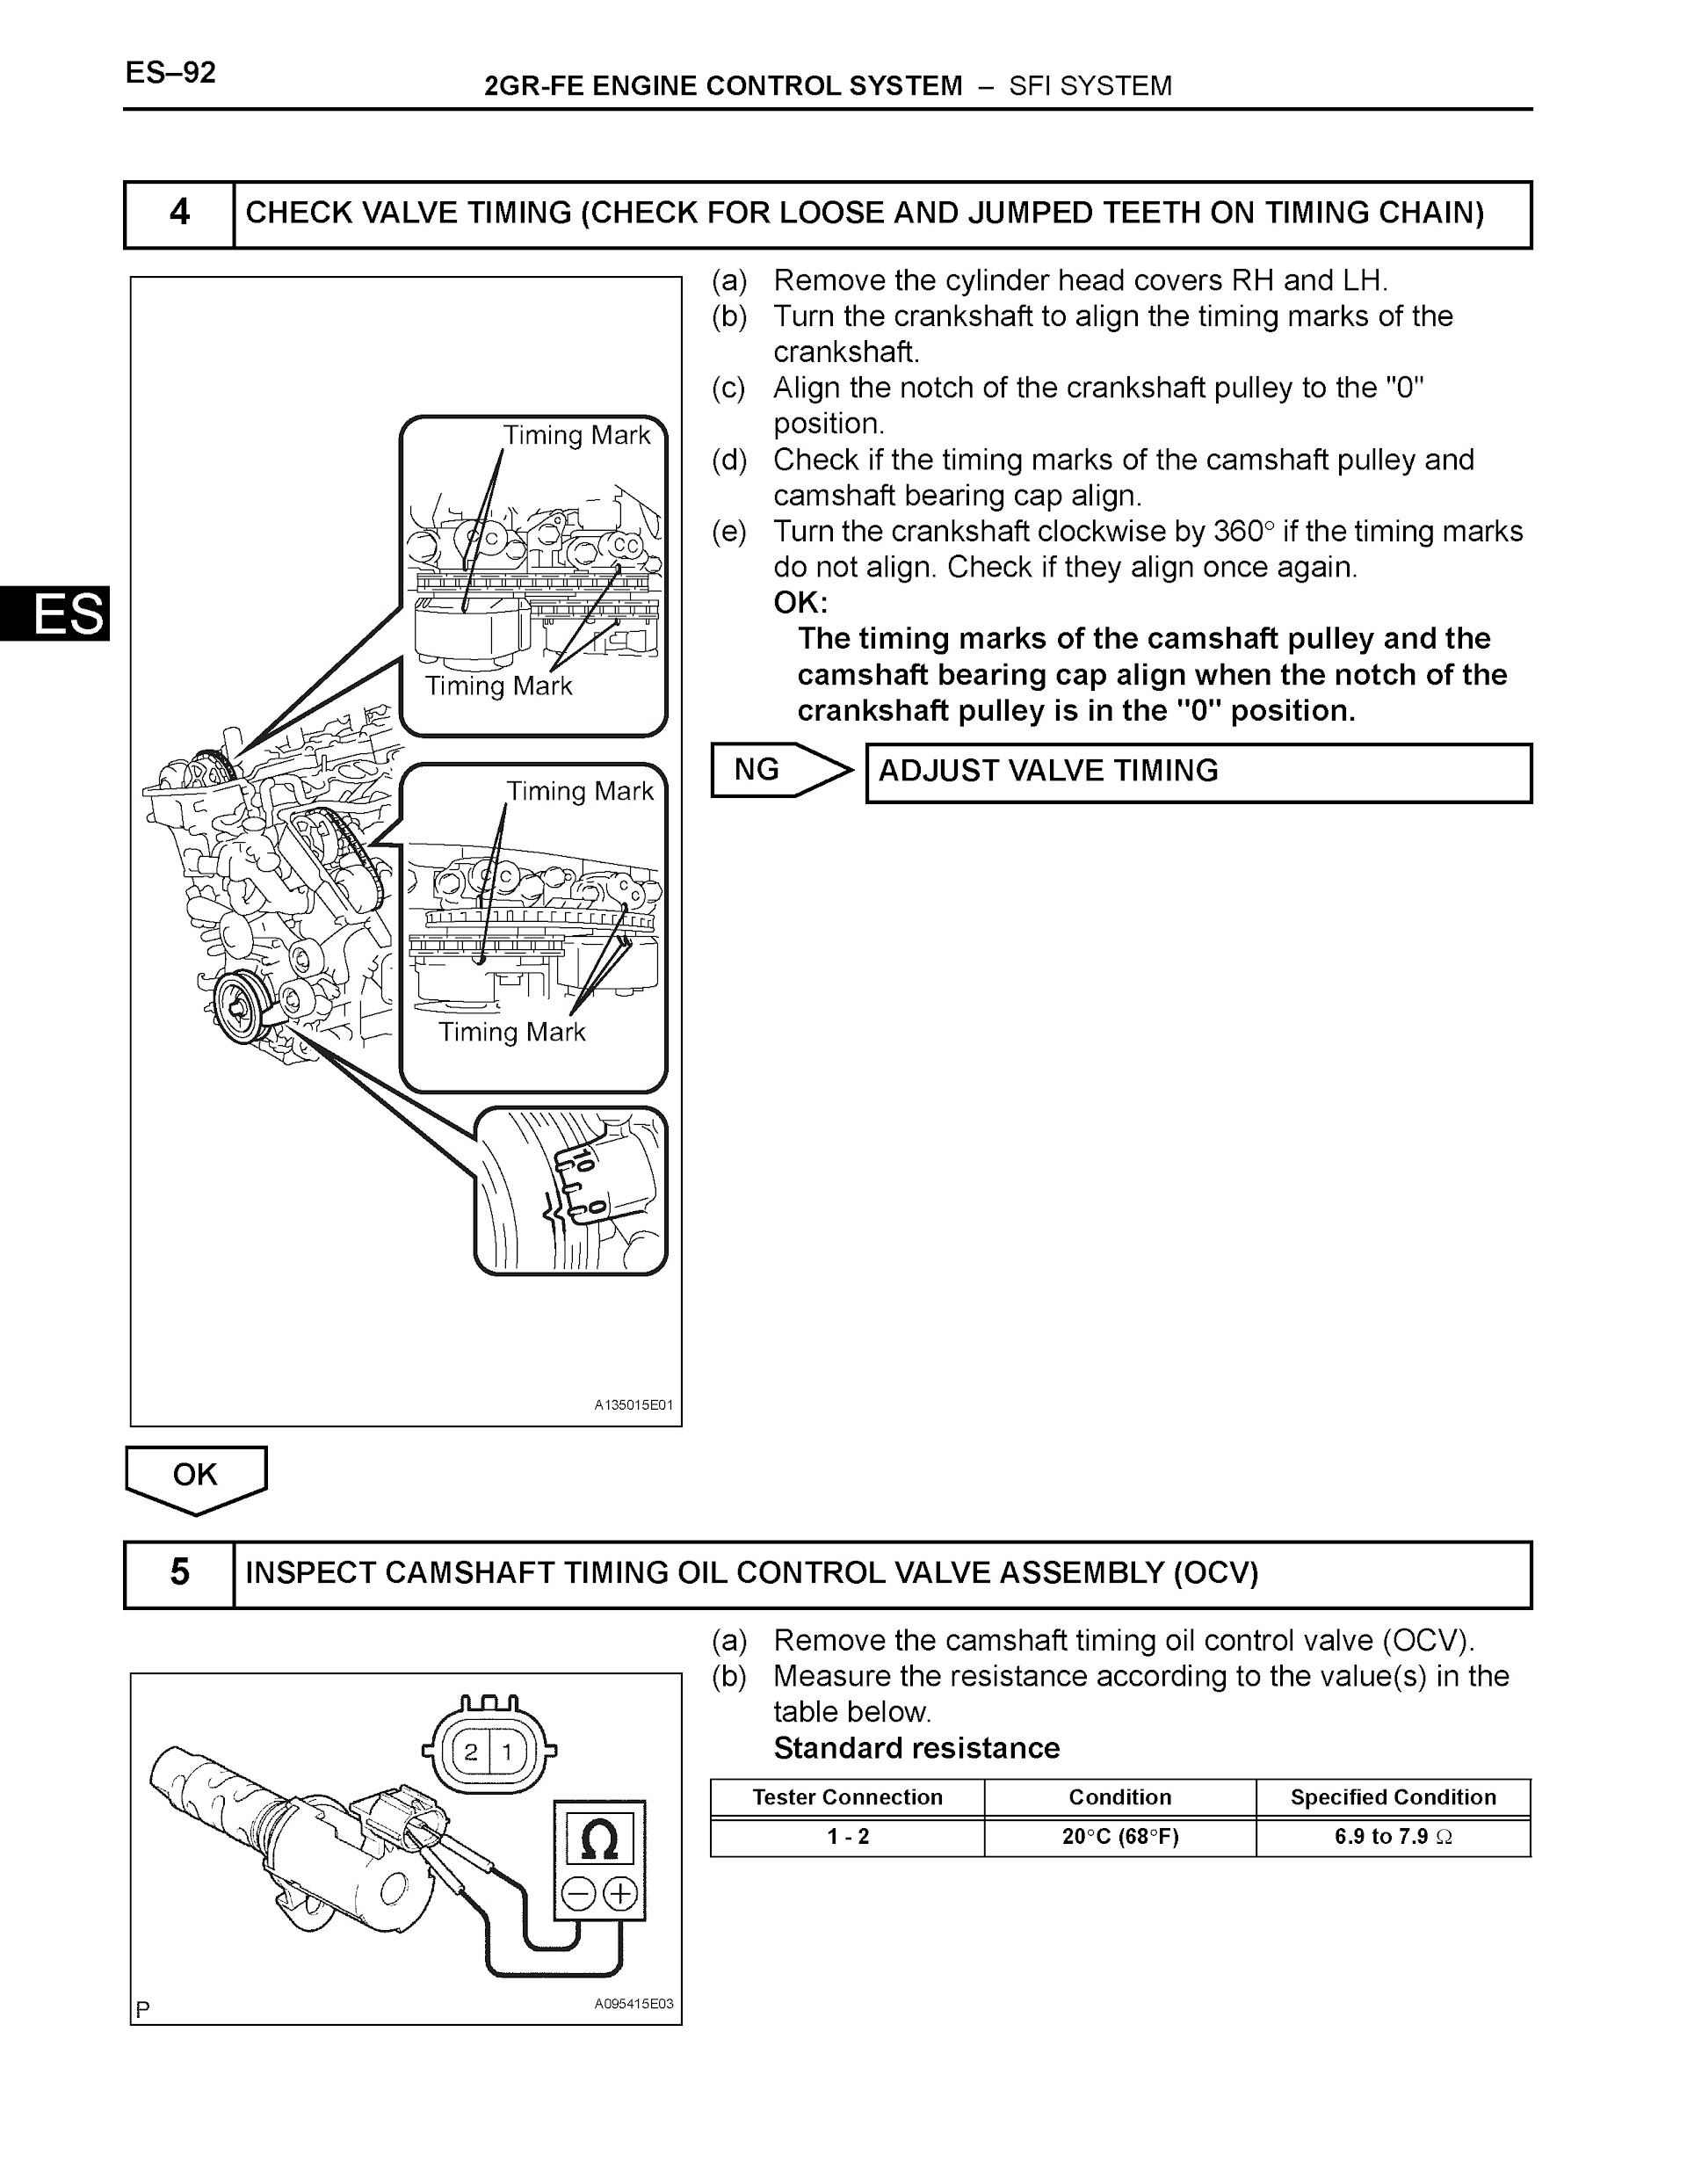 2007 Toyota Sienna Repair Manual, 2GR-FE Engine Control System